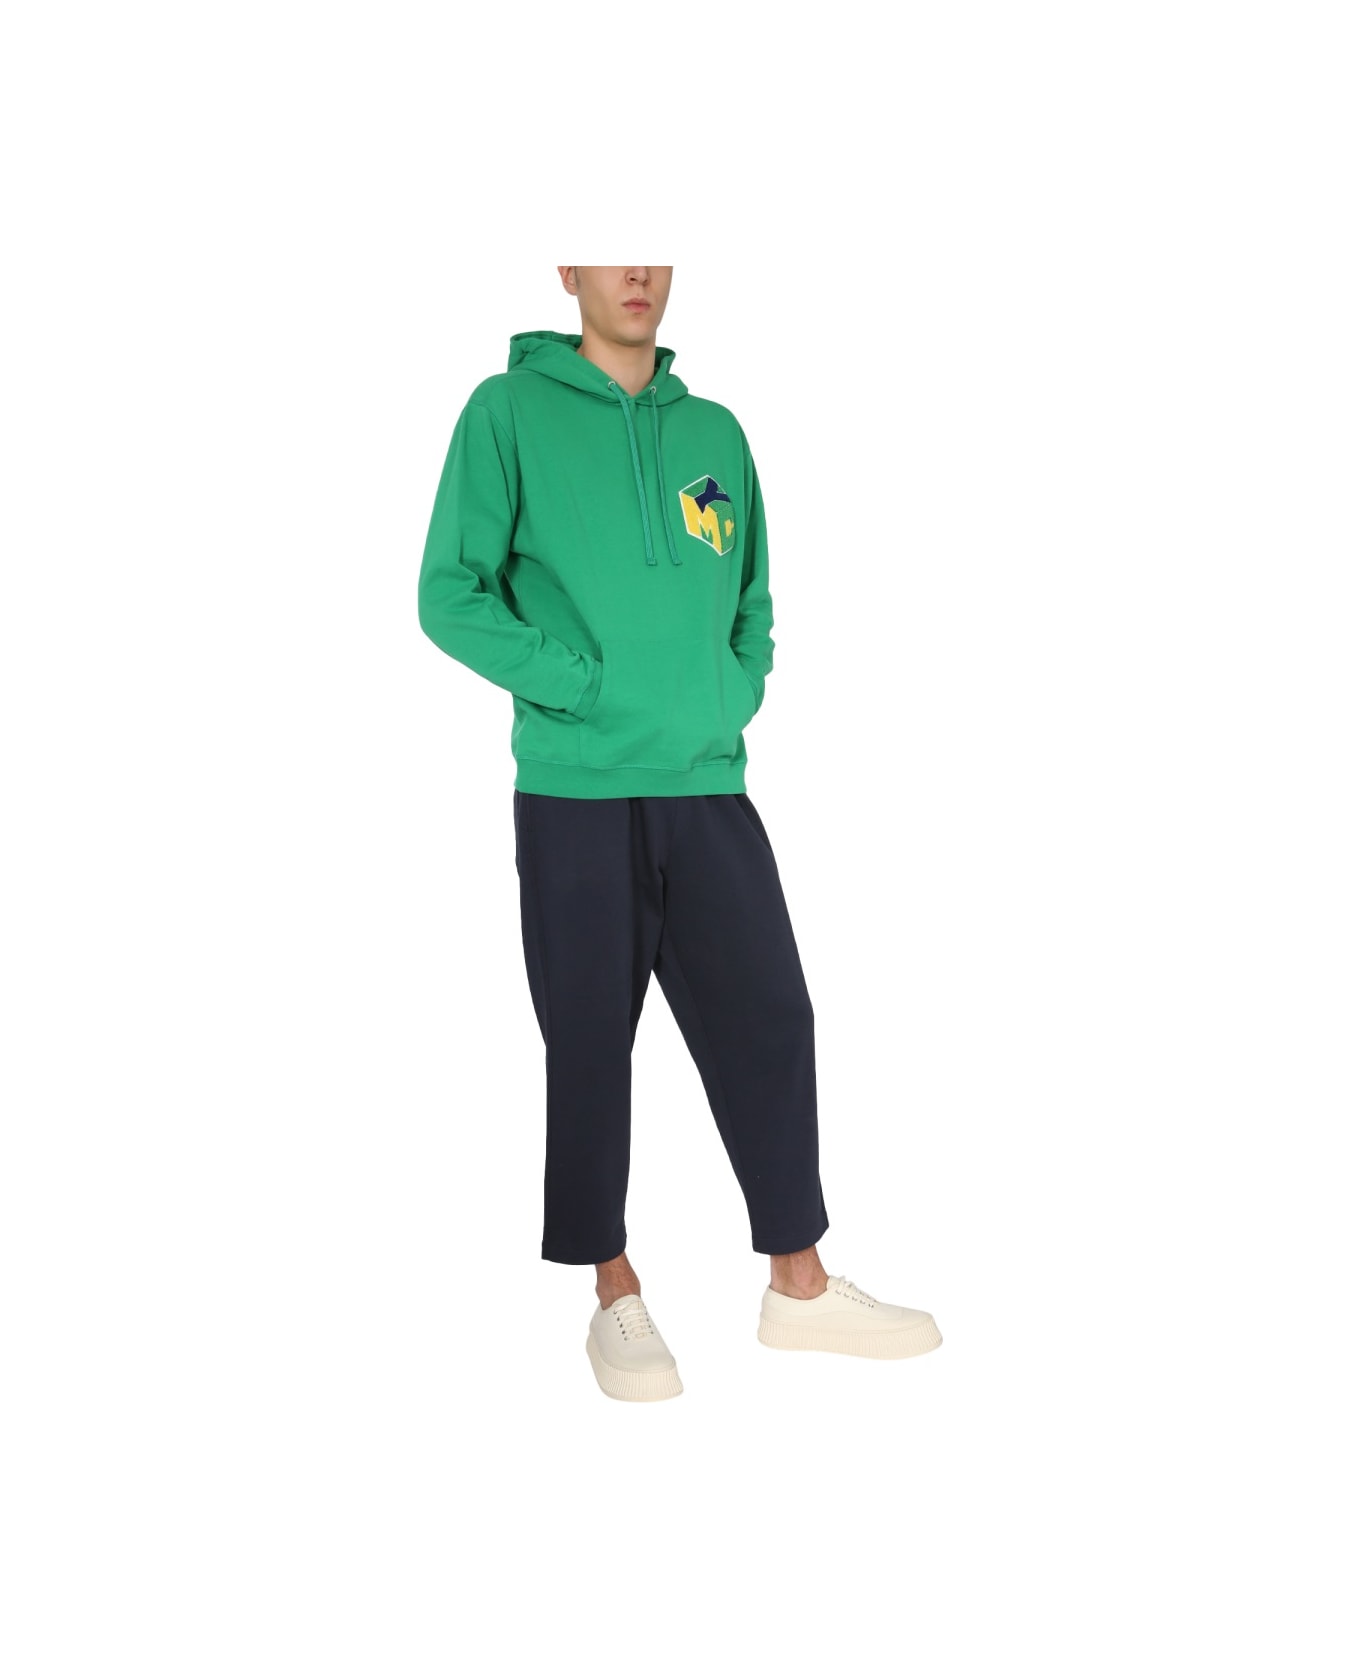 YMC Trugoy Hooded Sweatshirt - GREEN